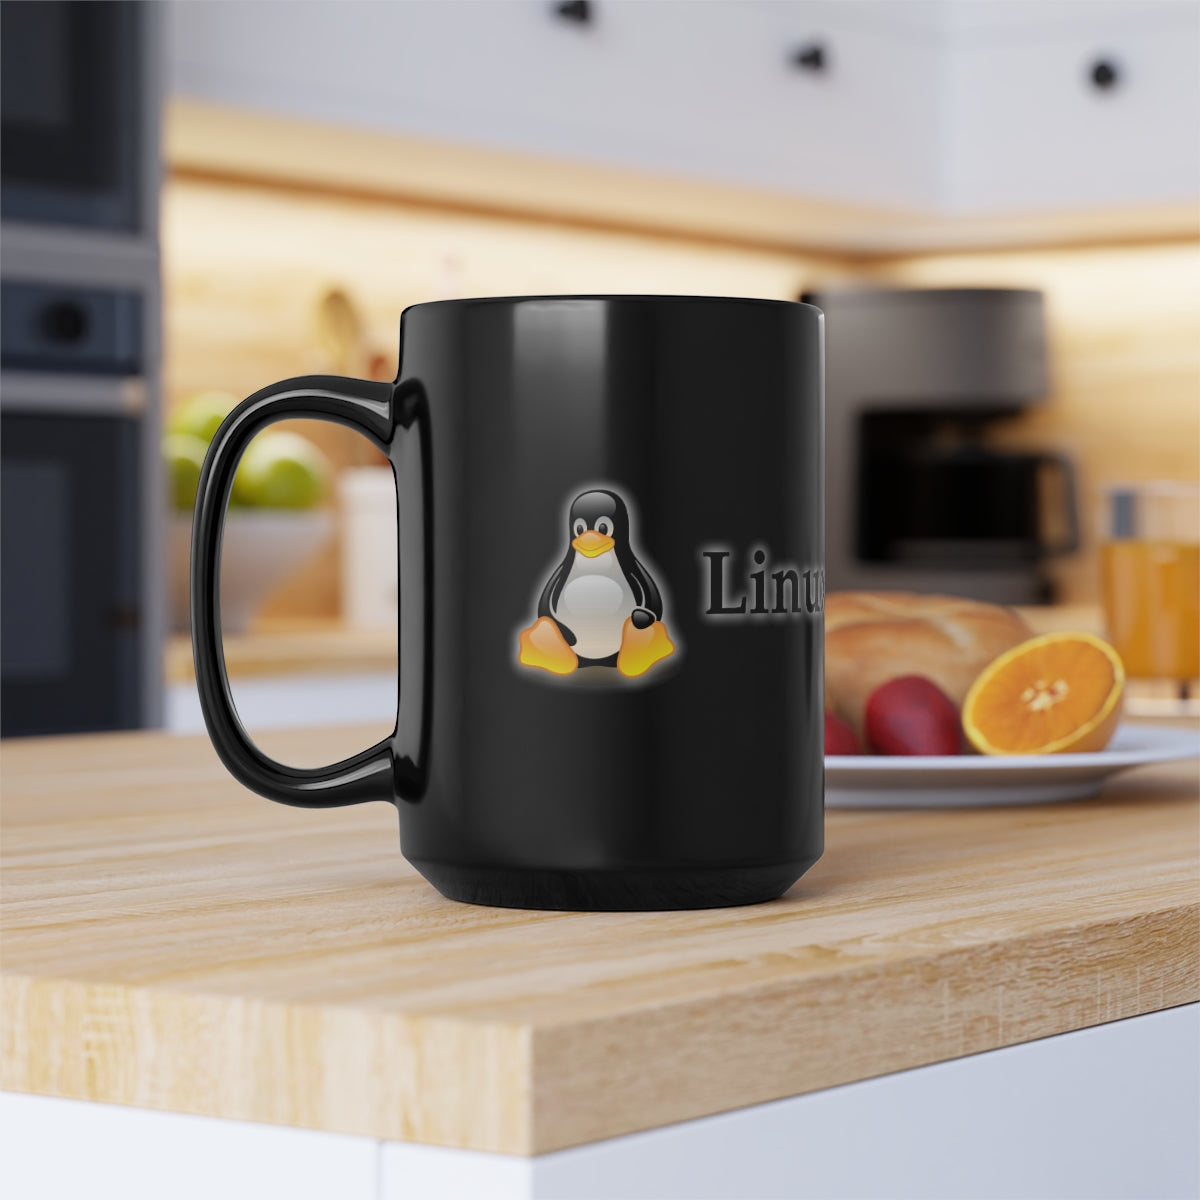 Linux - Black Mug, 15oz